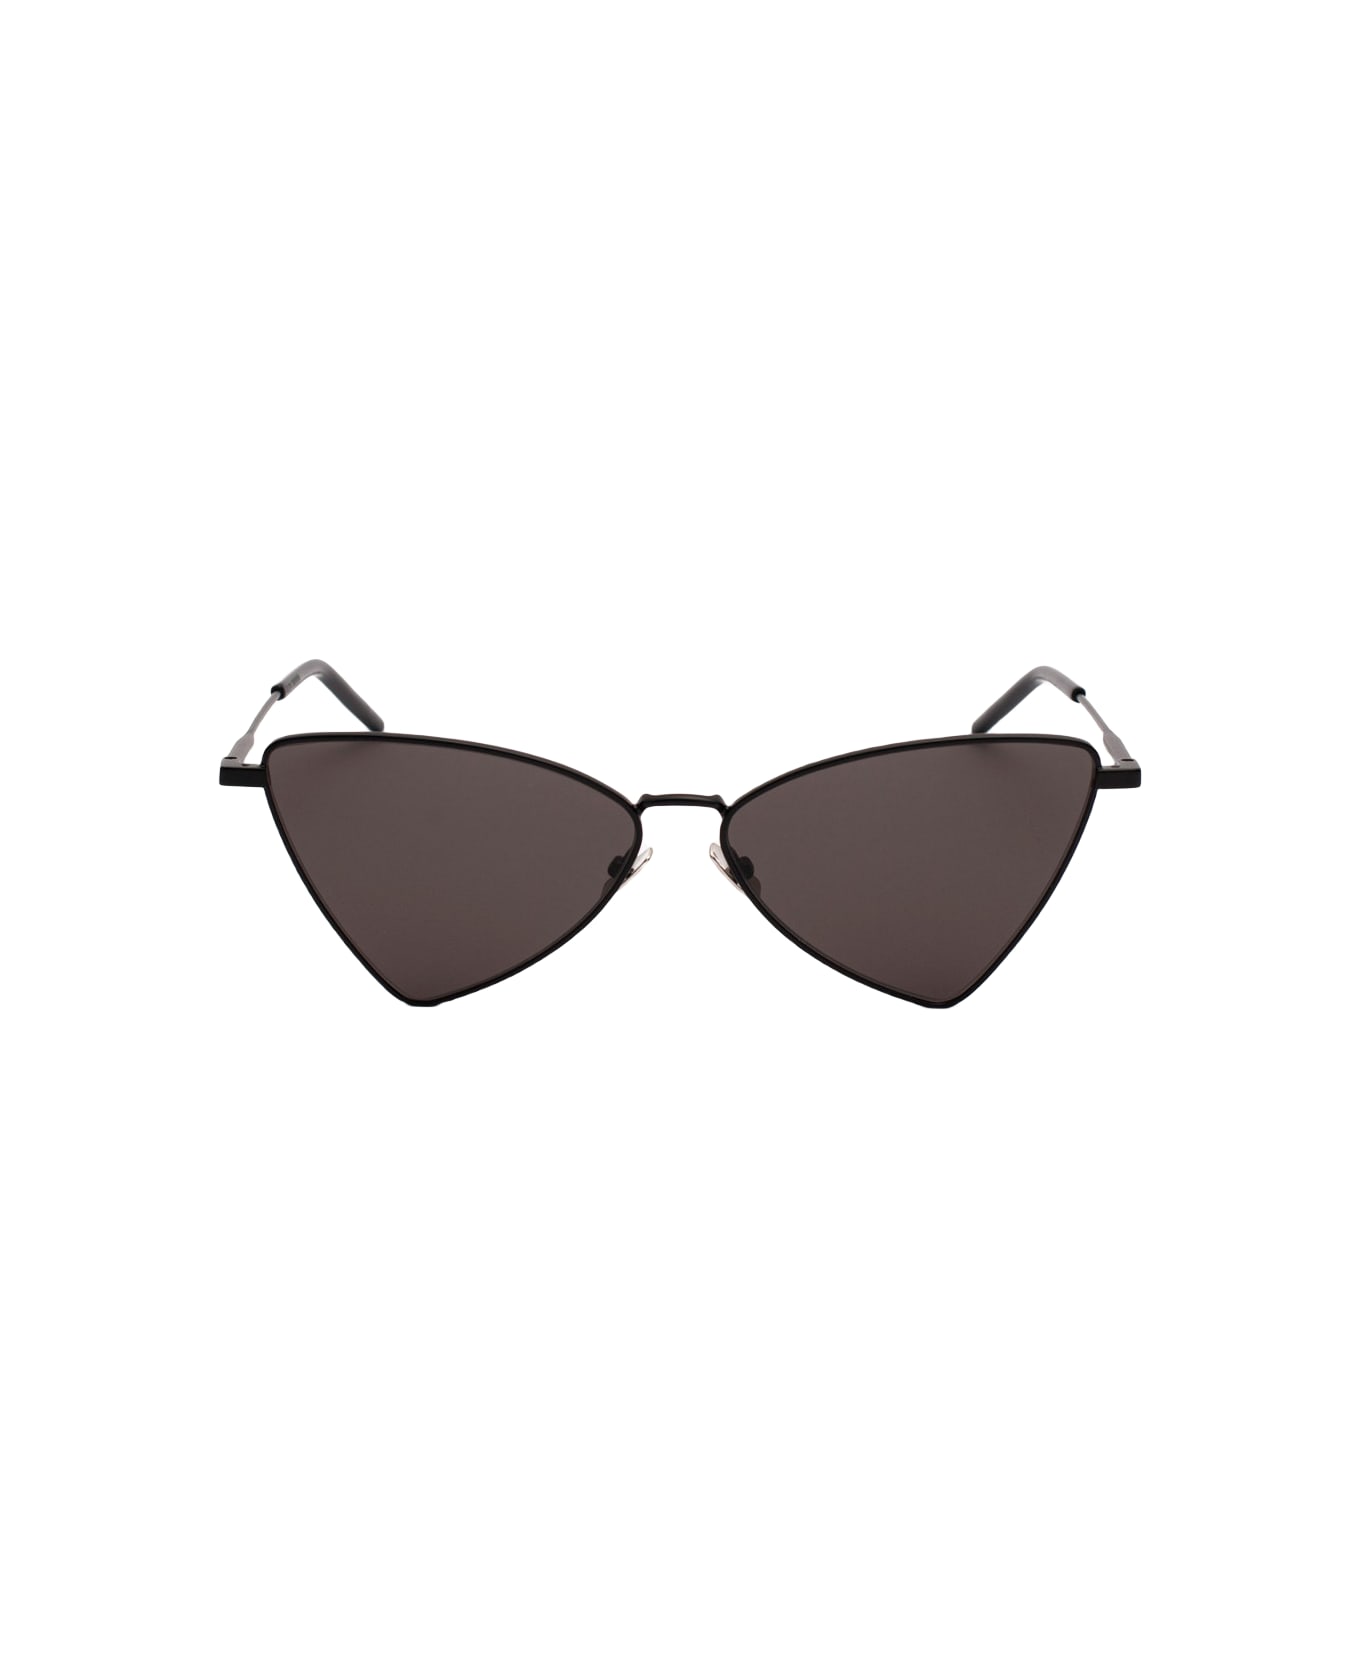 Saint Laurent Eyewear sl 303 002 Sunglasses - Nero